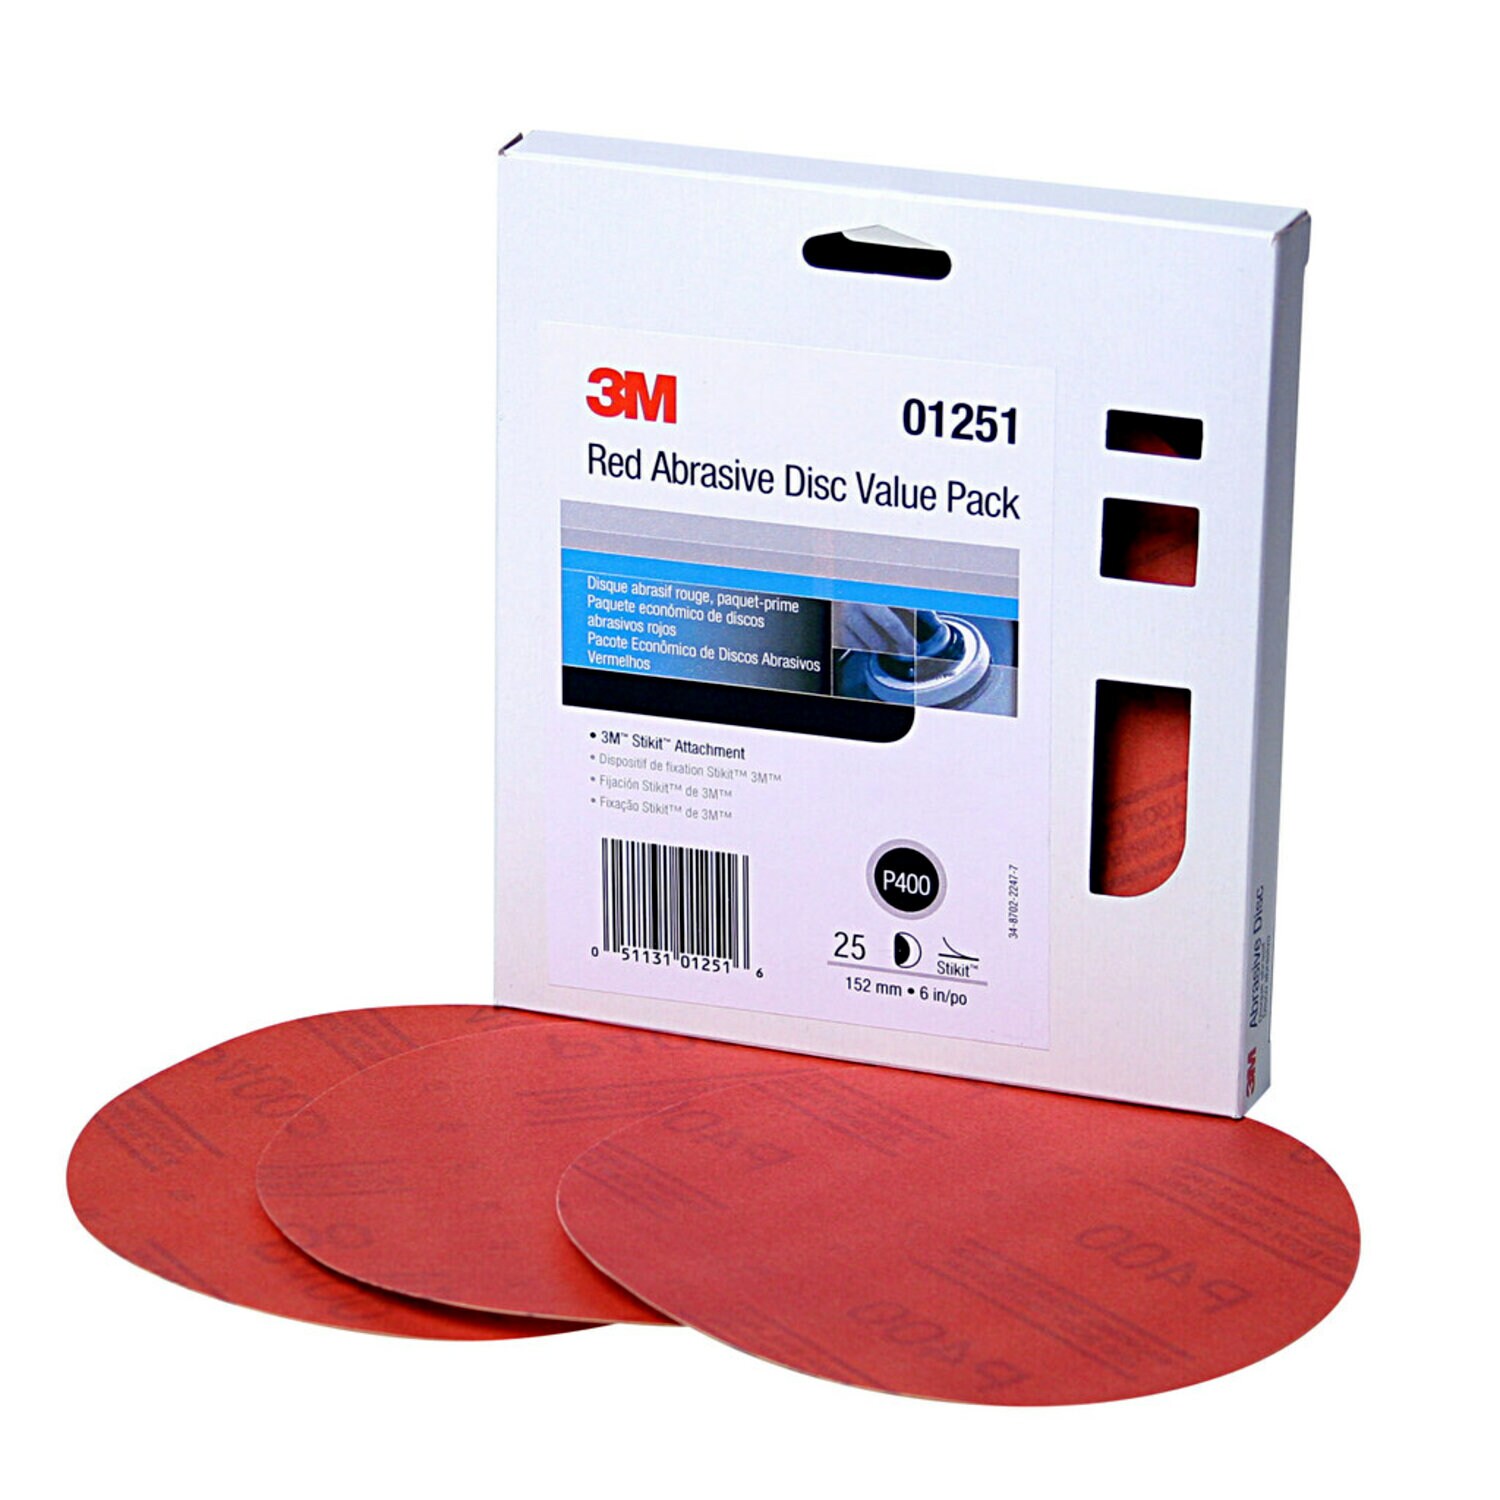 7010327777 - 3M Red Abrasive Stikit Disc Value Pack, 01251, 6 in, P400 grade, 25
discs per carton, 4 cartons per case